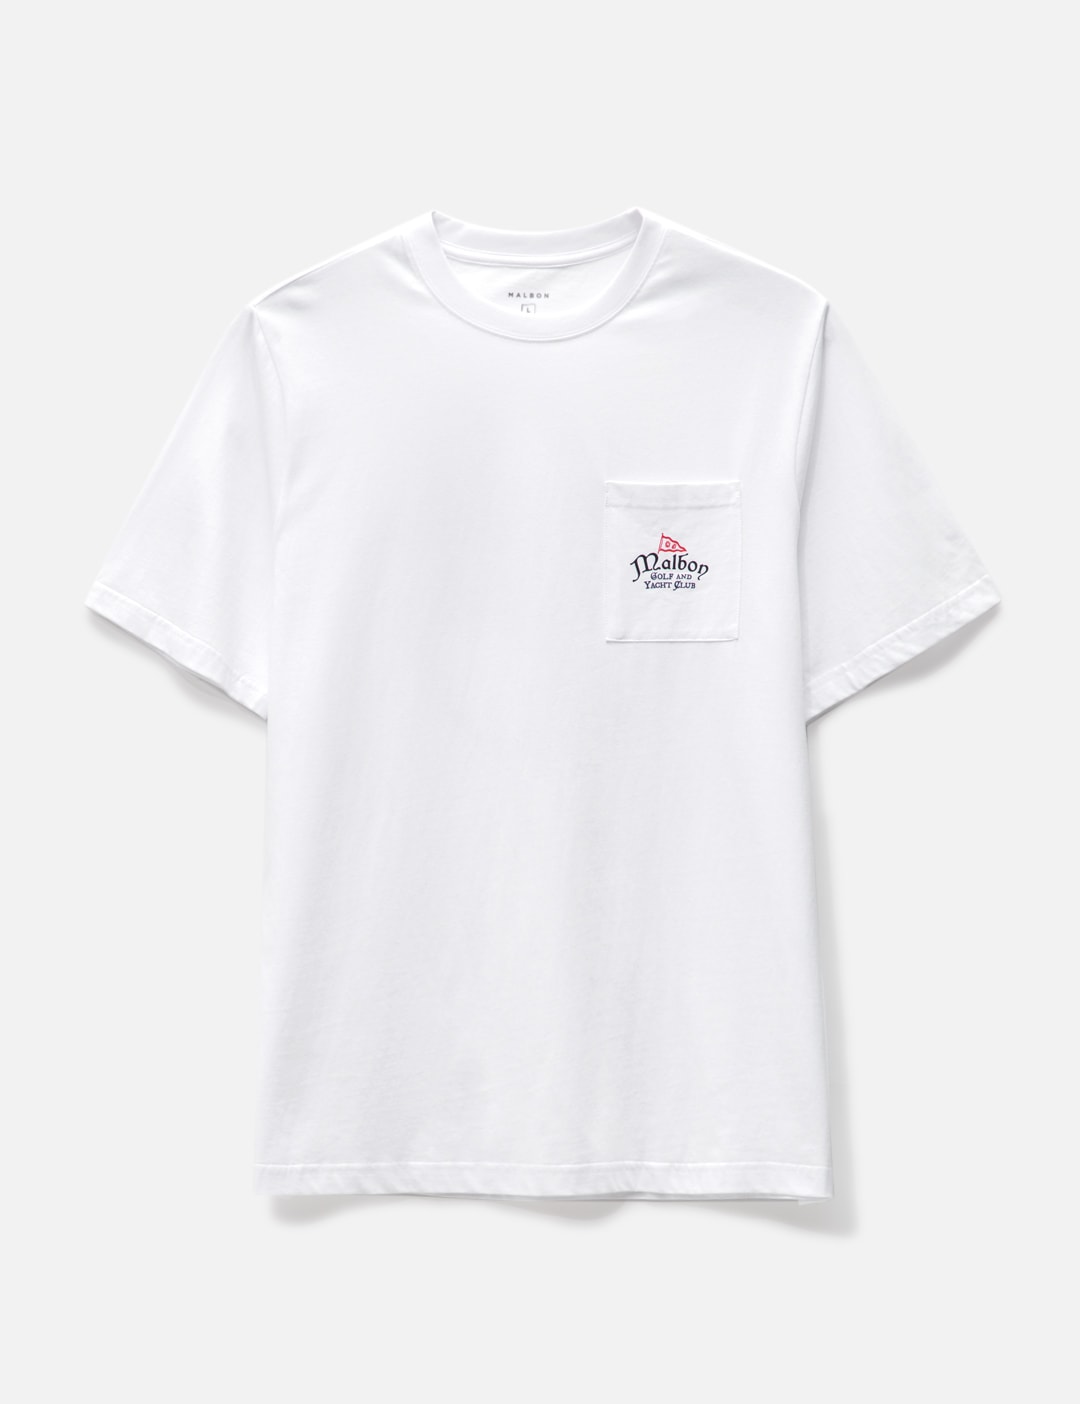 Malbon Golf - Yacht Club Pocket T-shirt | HBX - Globally Curated